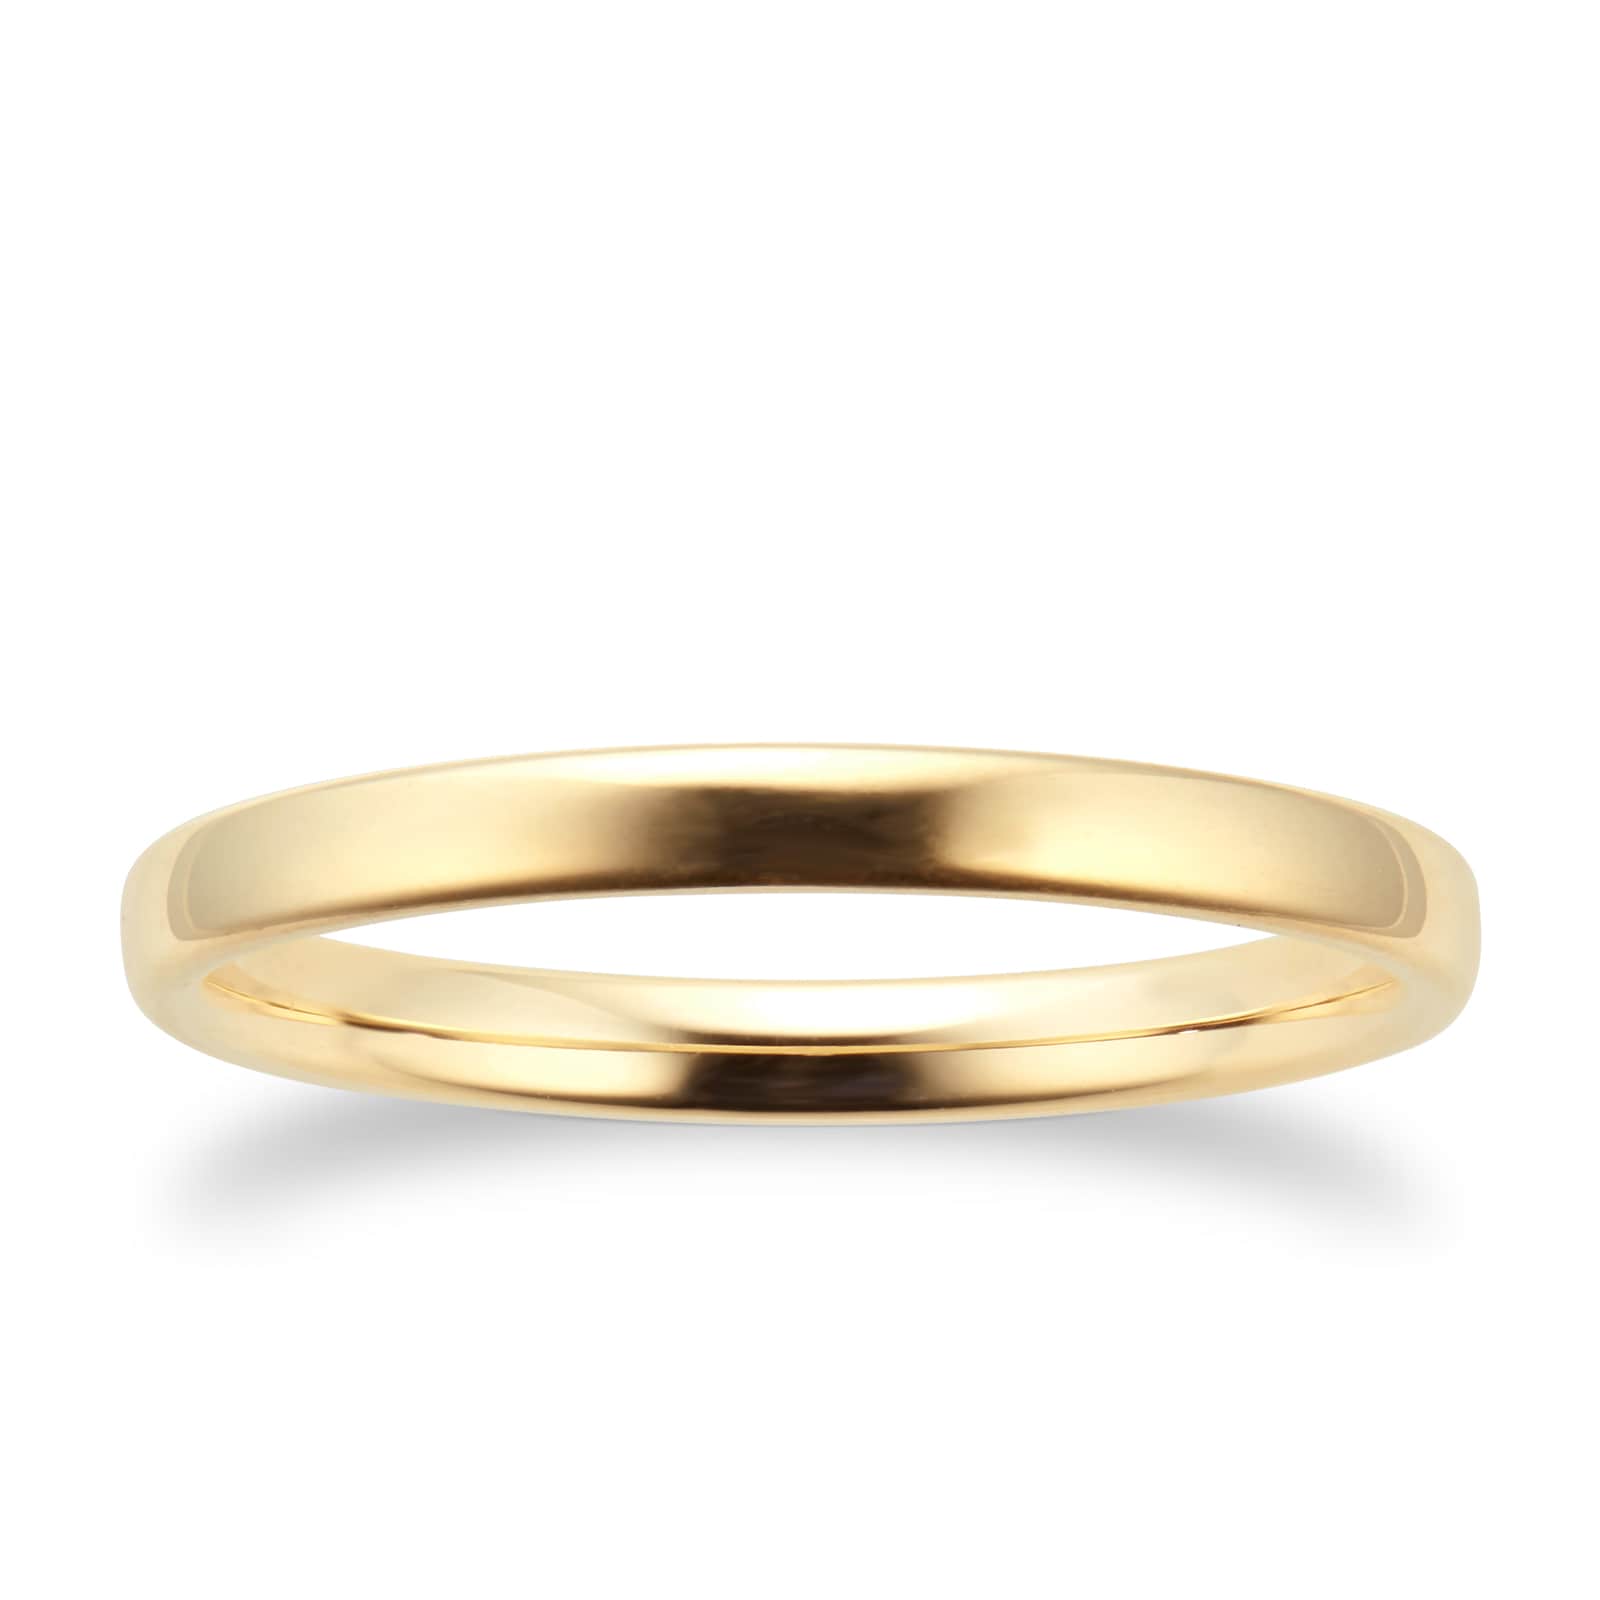 2mm Slight Court Standard Wedding Ring In 9 Carat Yellow Gold Ring Size Q